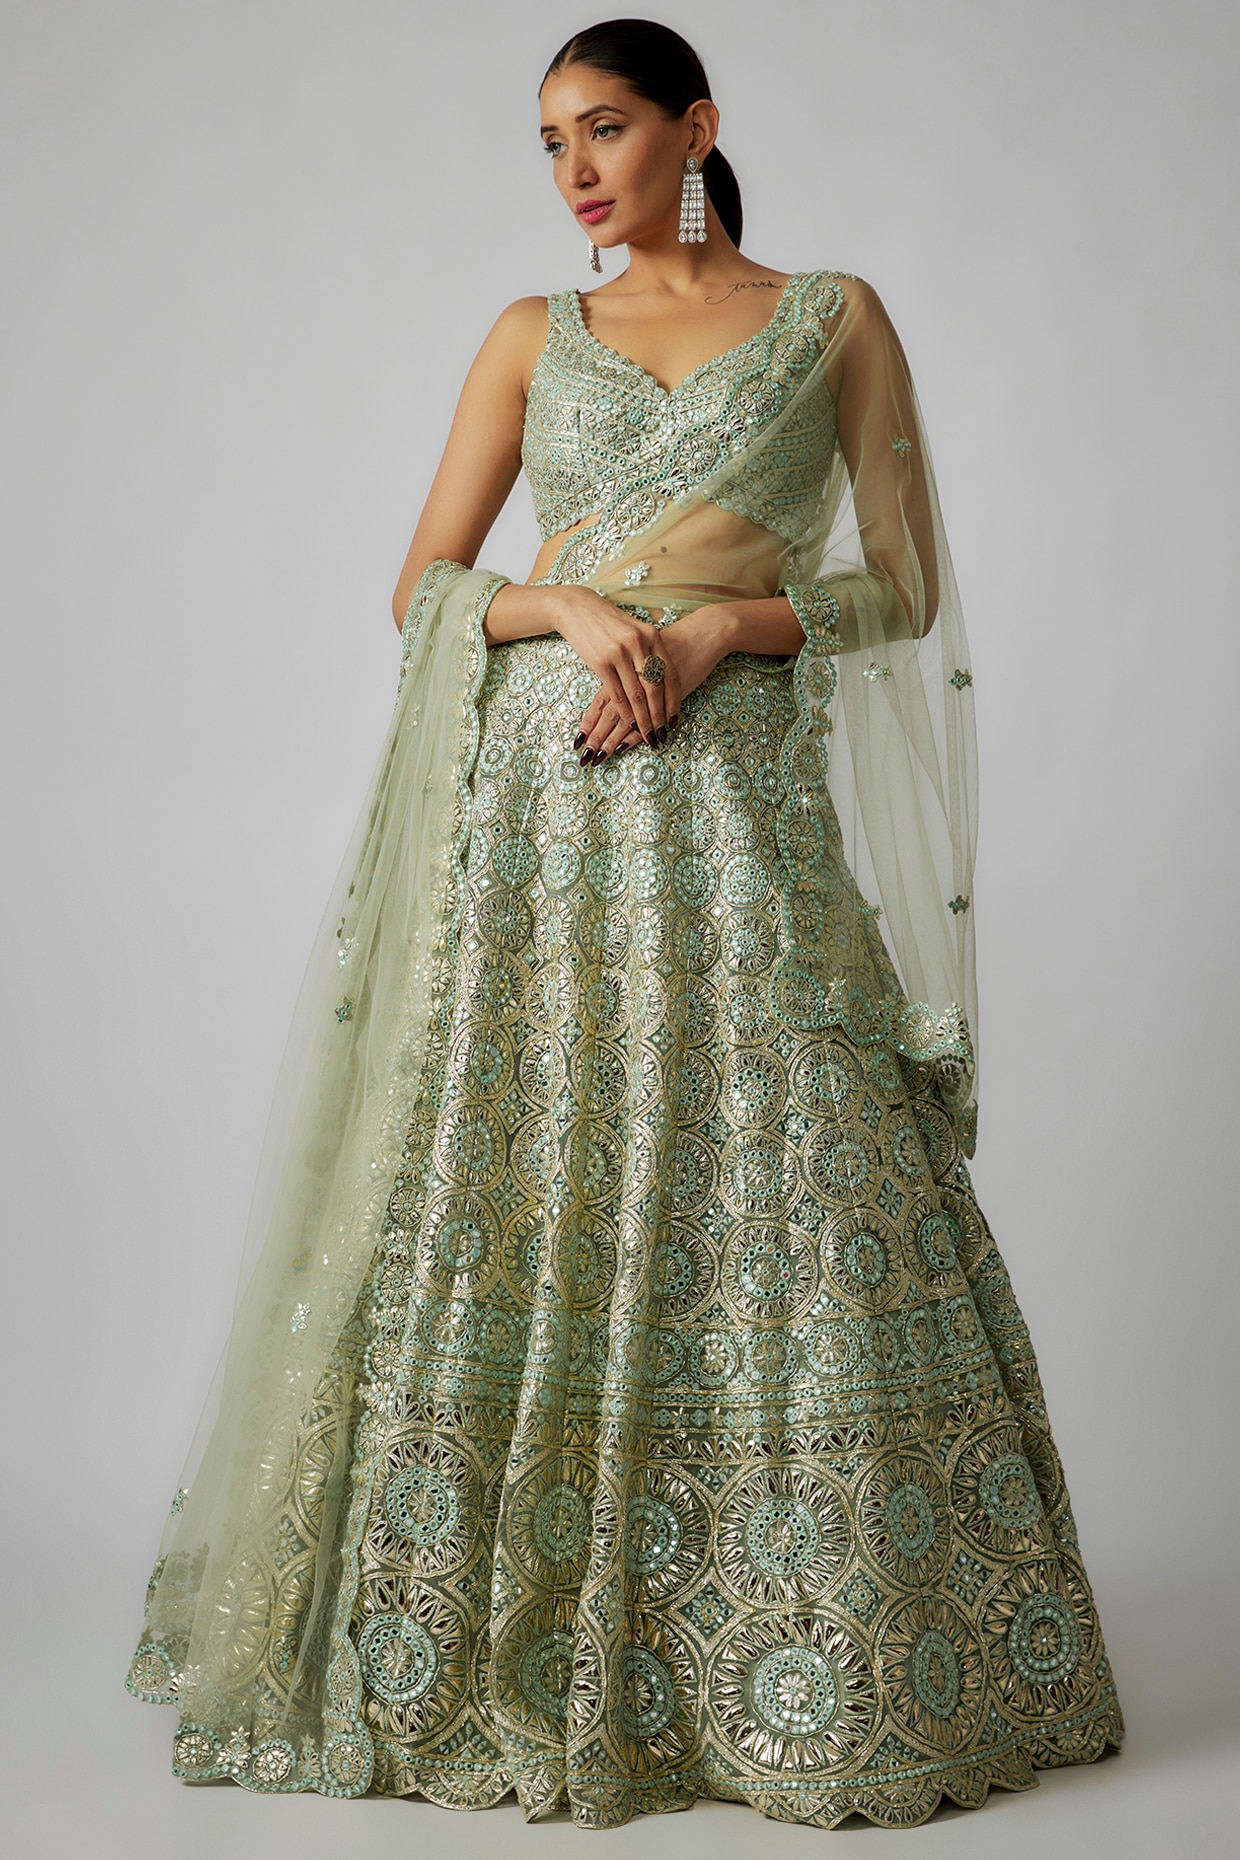 The embroidered green lehenga – Archana Kochhar India